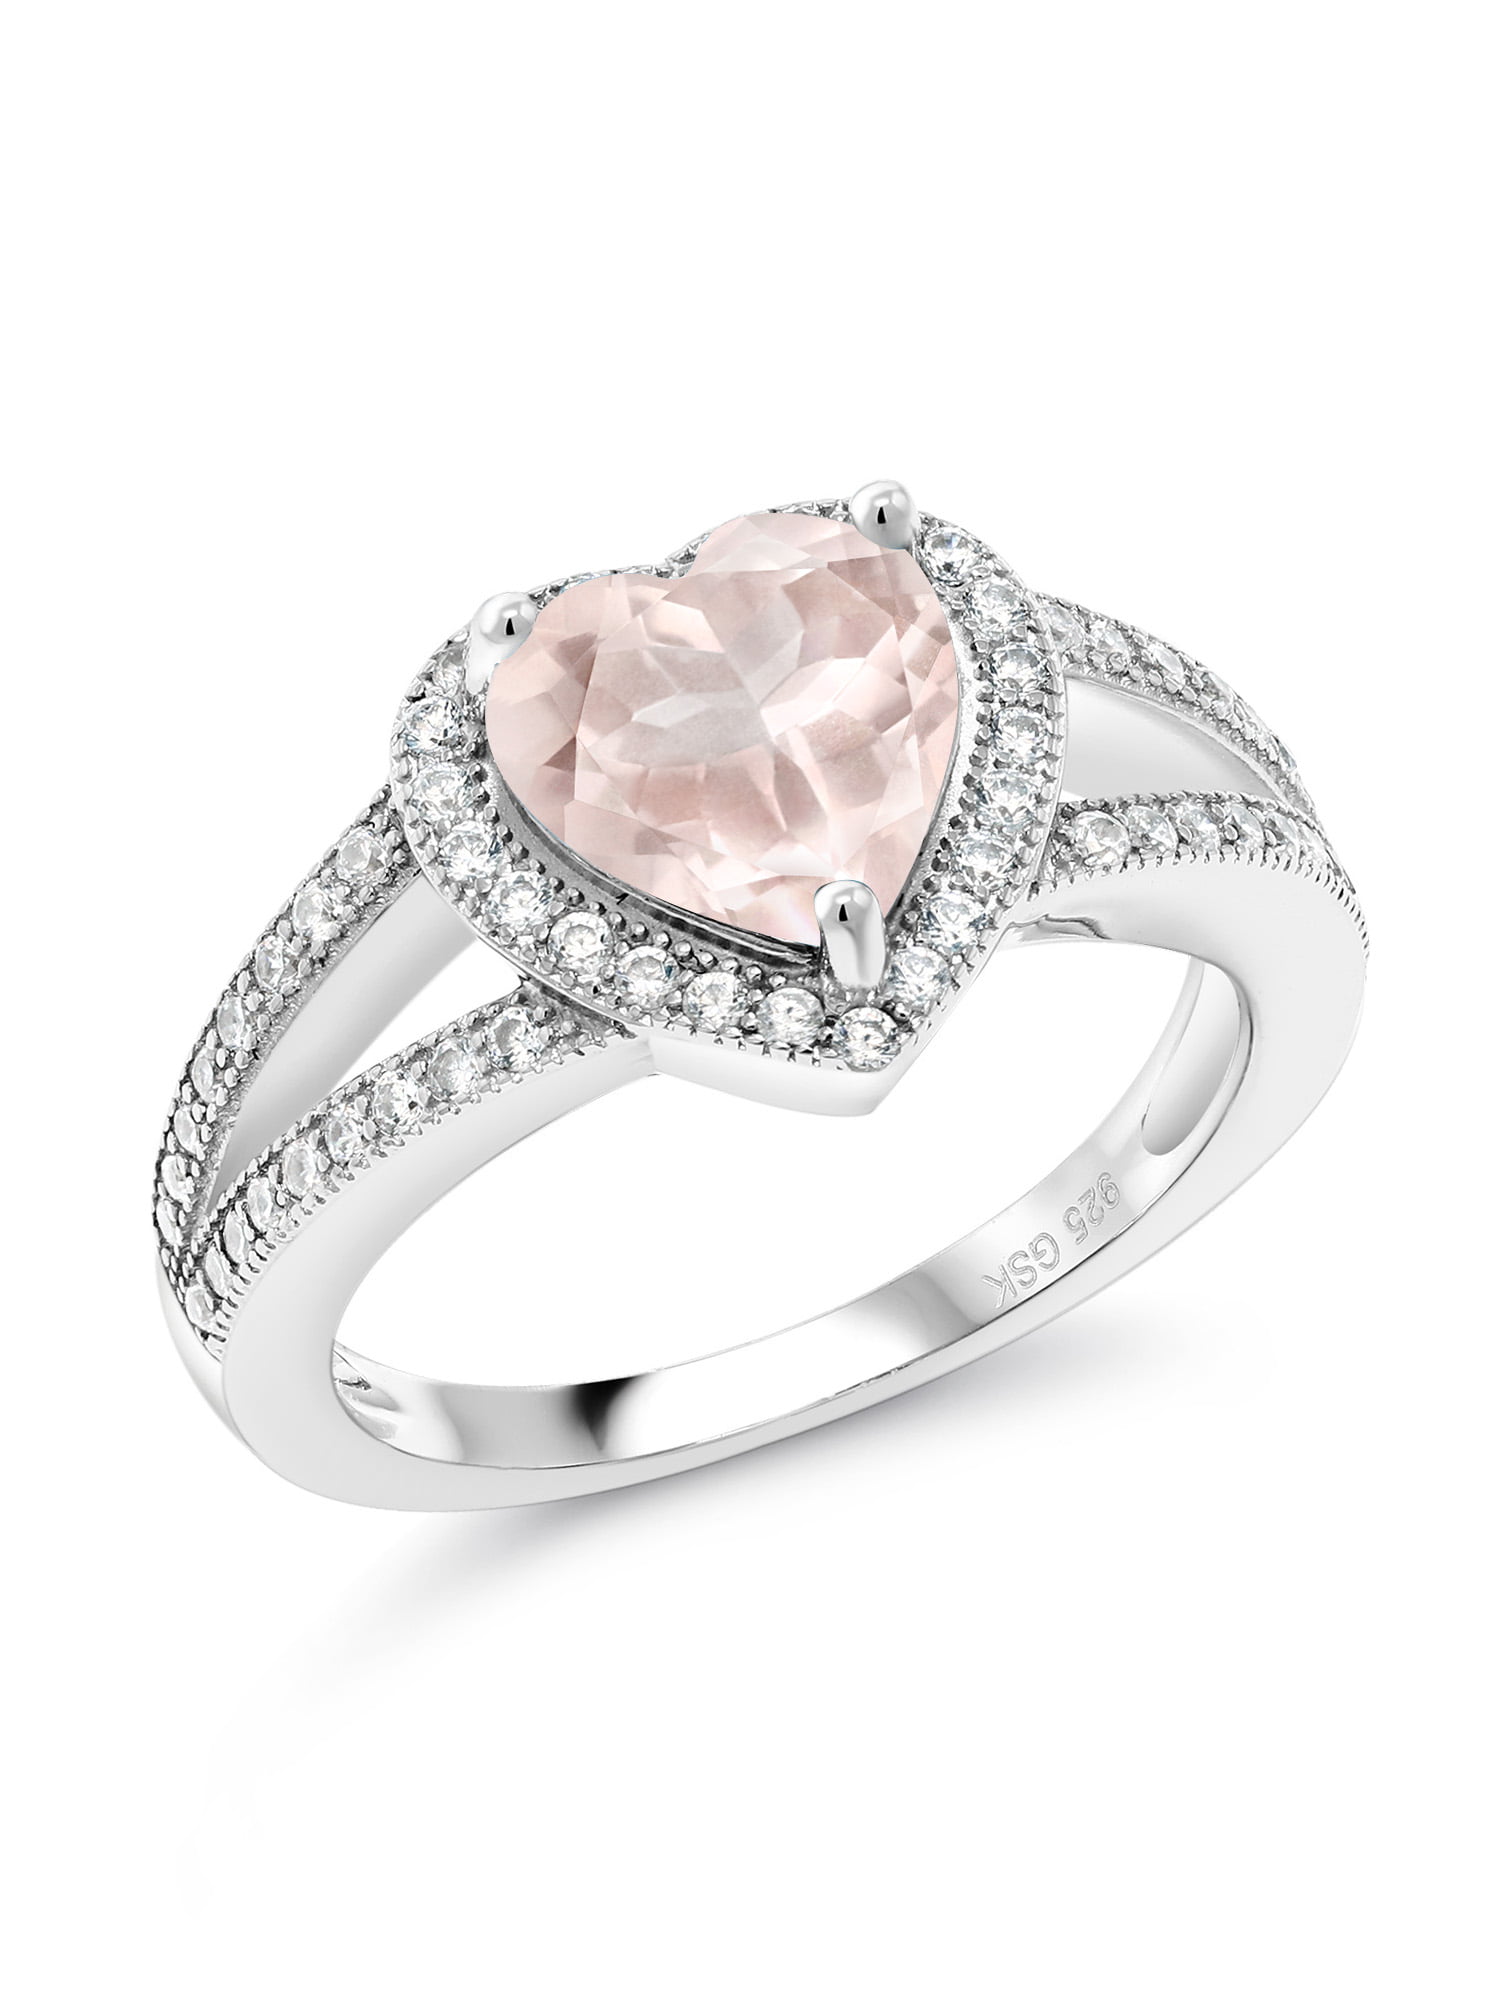 Semi Precious Rose Quartz Ring Gemstone Jewelry Solid Silver Ring Natural Rose Quartz Ring Gift For Her